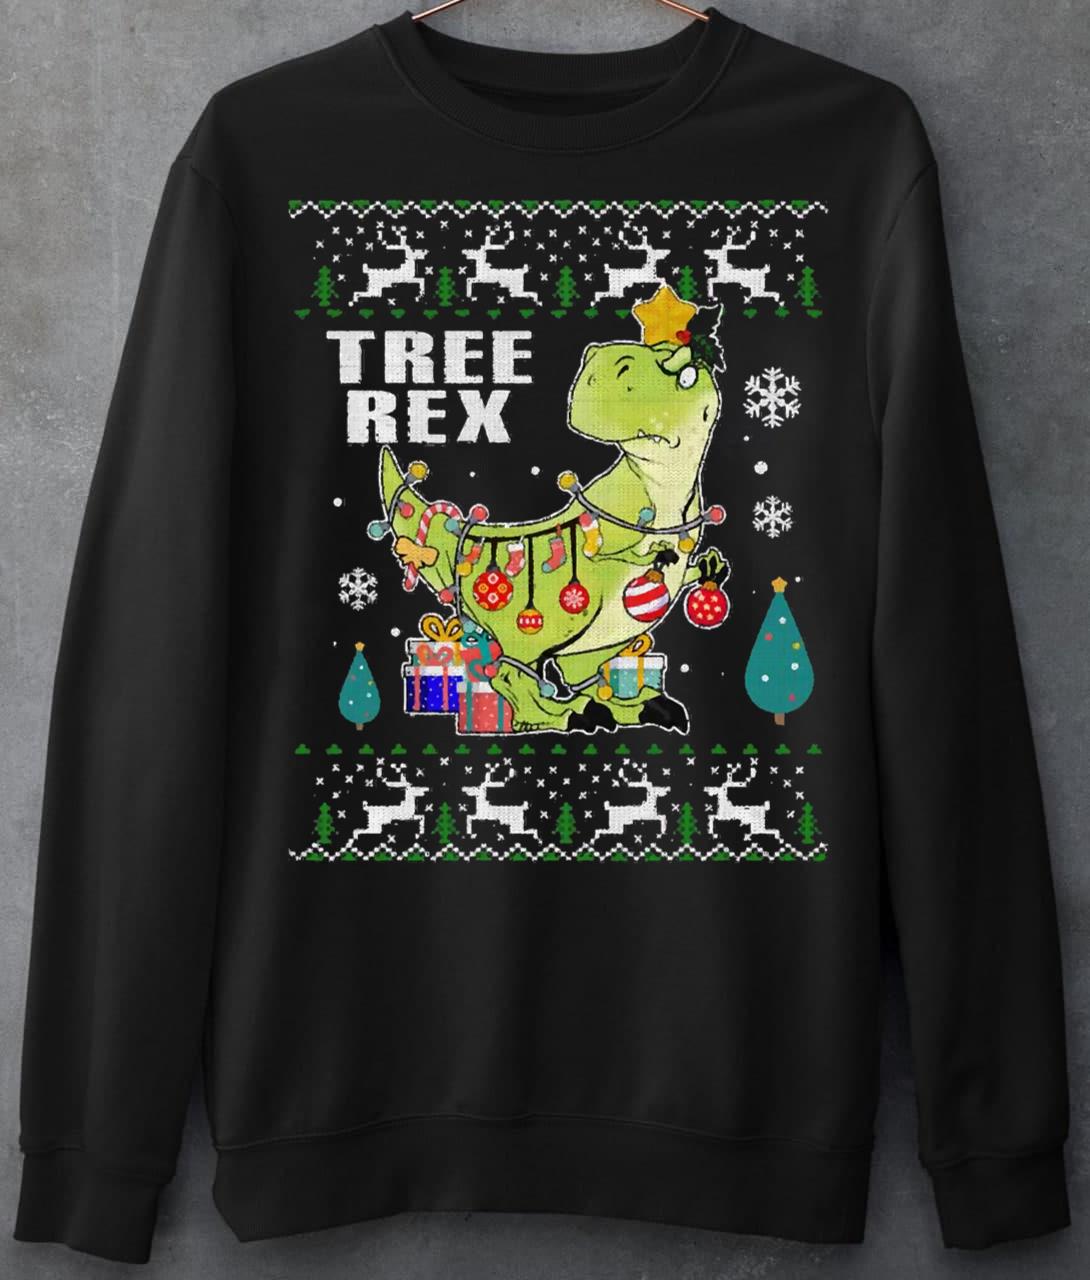 Tree Rex T-Shirt T-Rex Dinosaur Christmas